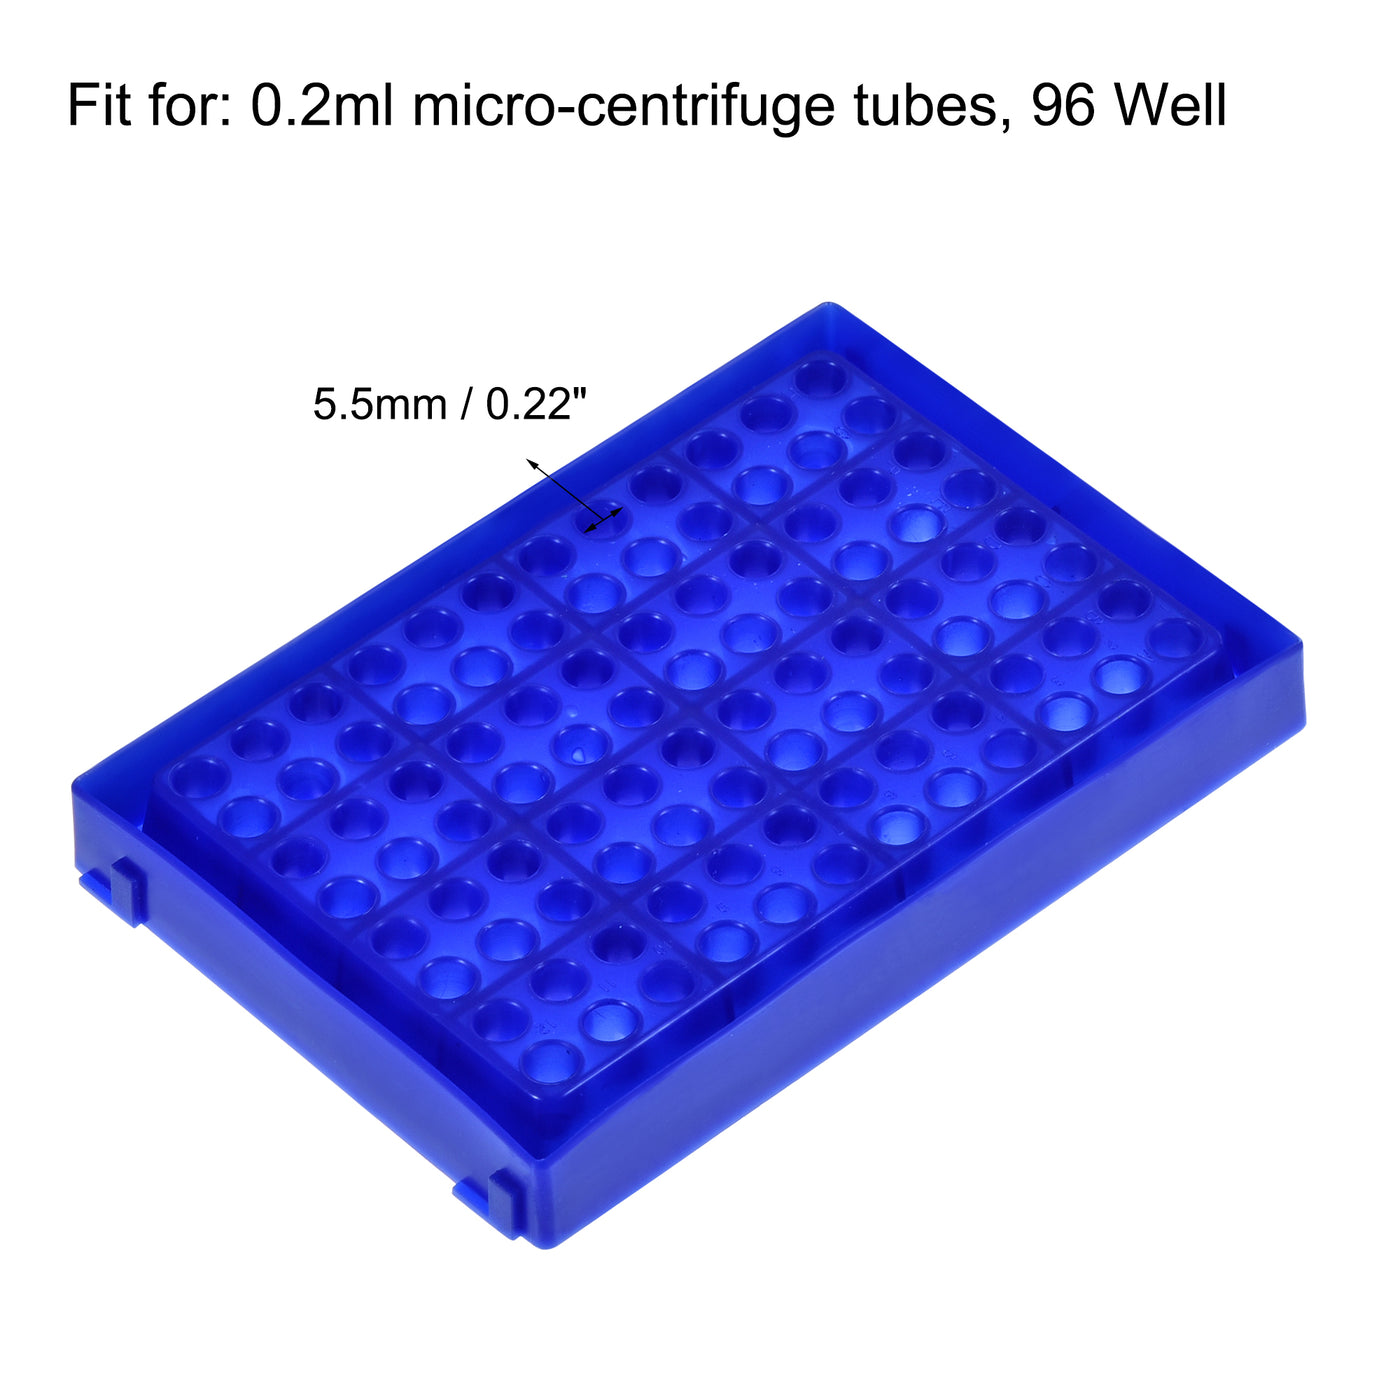 uxcell Uxcell Centrifuge Tube Freezer Storage Box 96-Well PP Holder Blue for 0.2ml Tubes